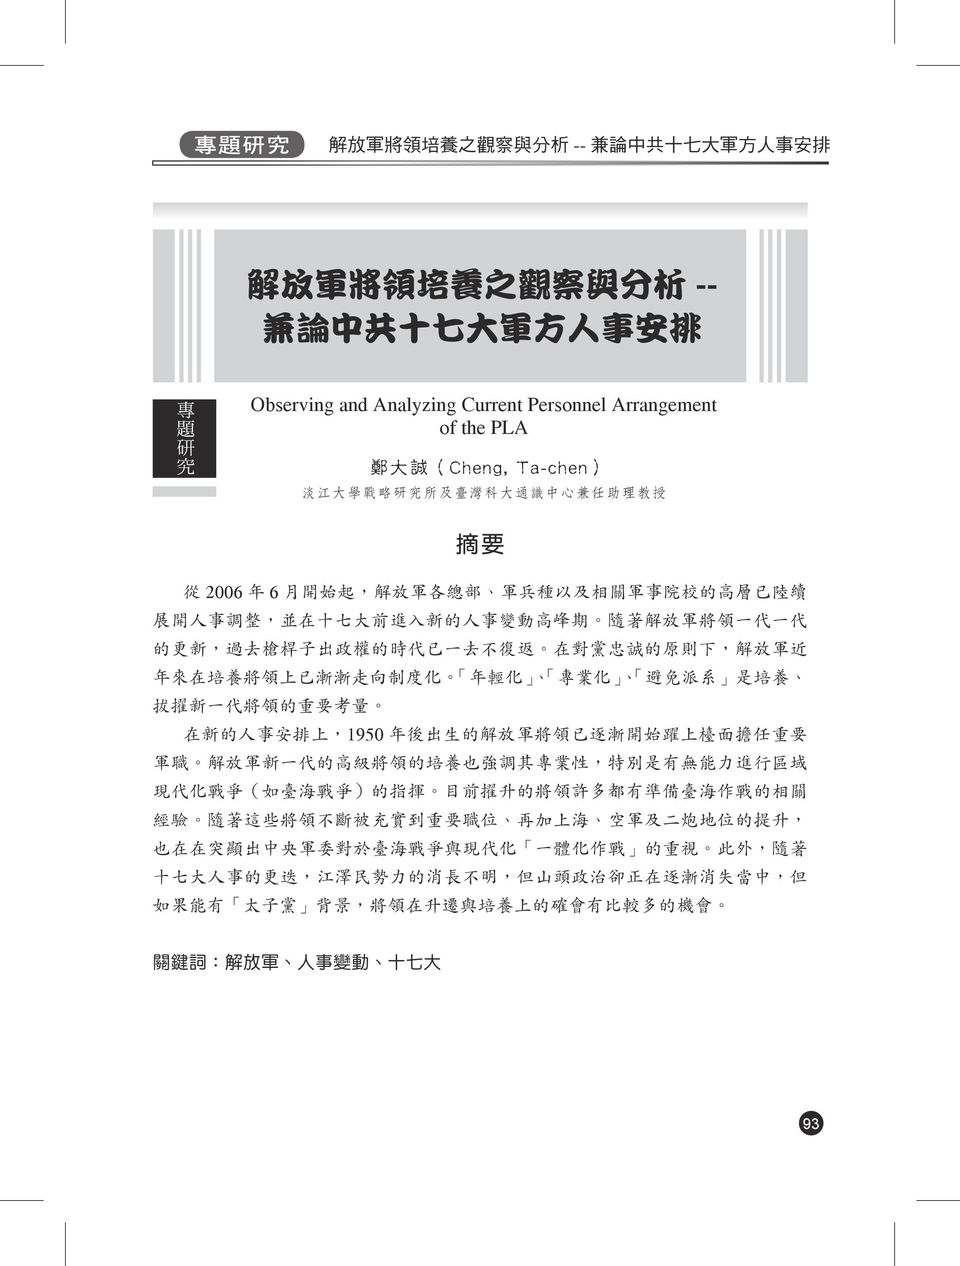 Personnel Arrangement of the PLA 鄭 大 誠 (Cheng, Ta-chen) 淡 江 大 學 戰 略 研 究 所